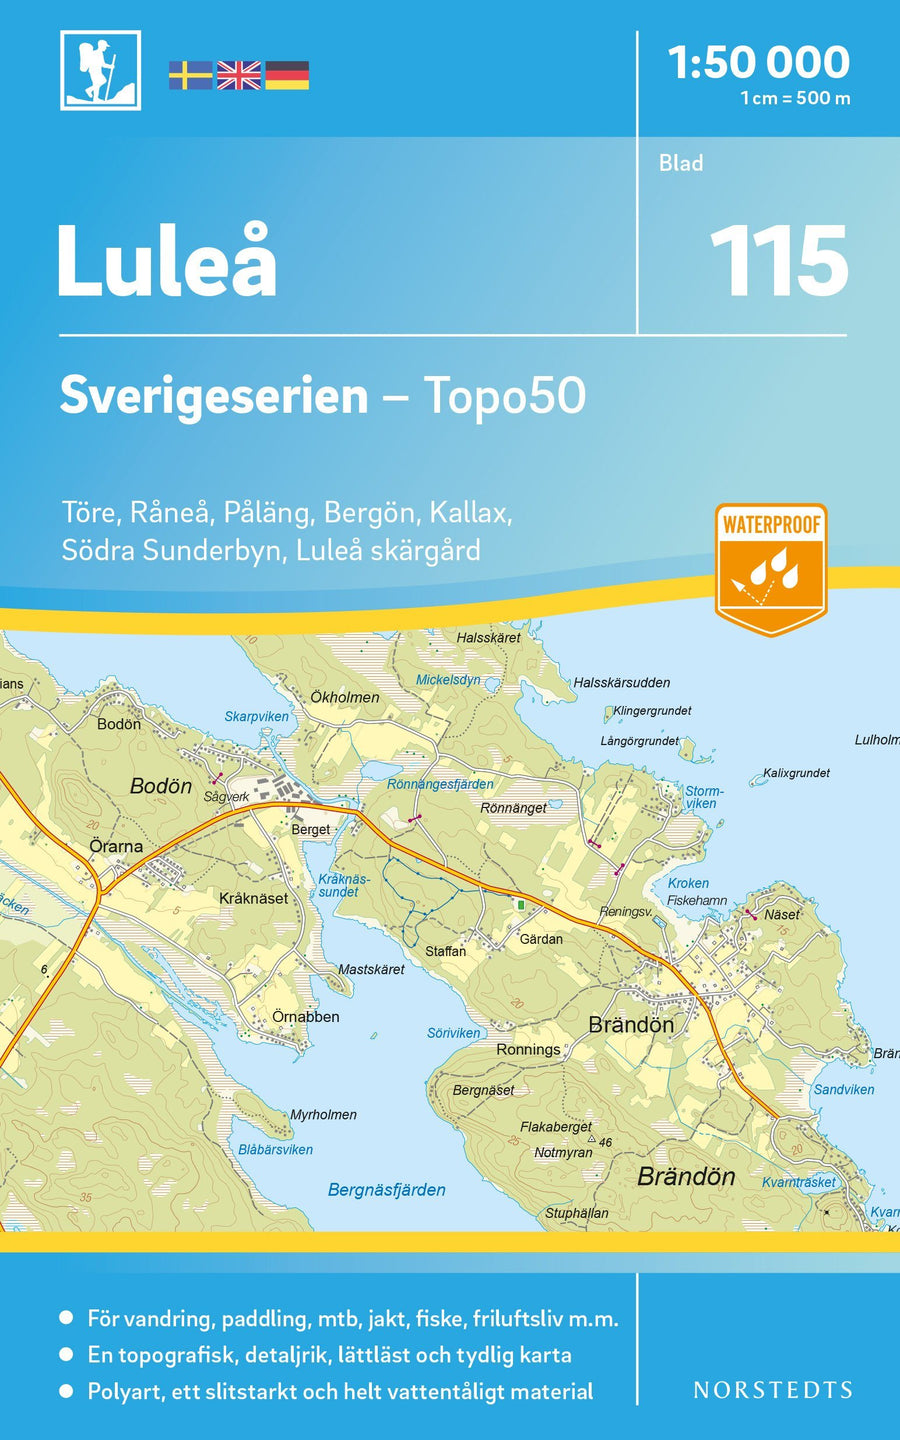 Carte topographique n° 115 - Luleå (Suède) | Norstedts - Sverigeserien carte pliée Norstedts 